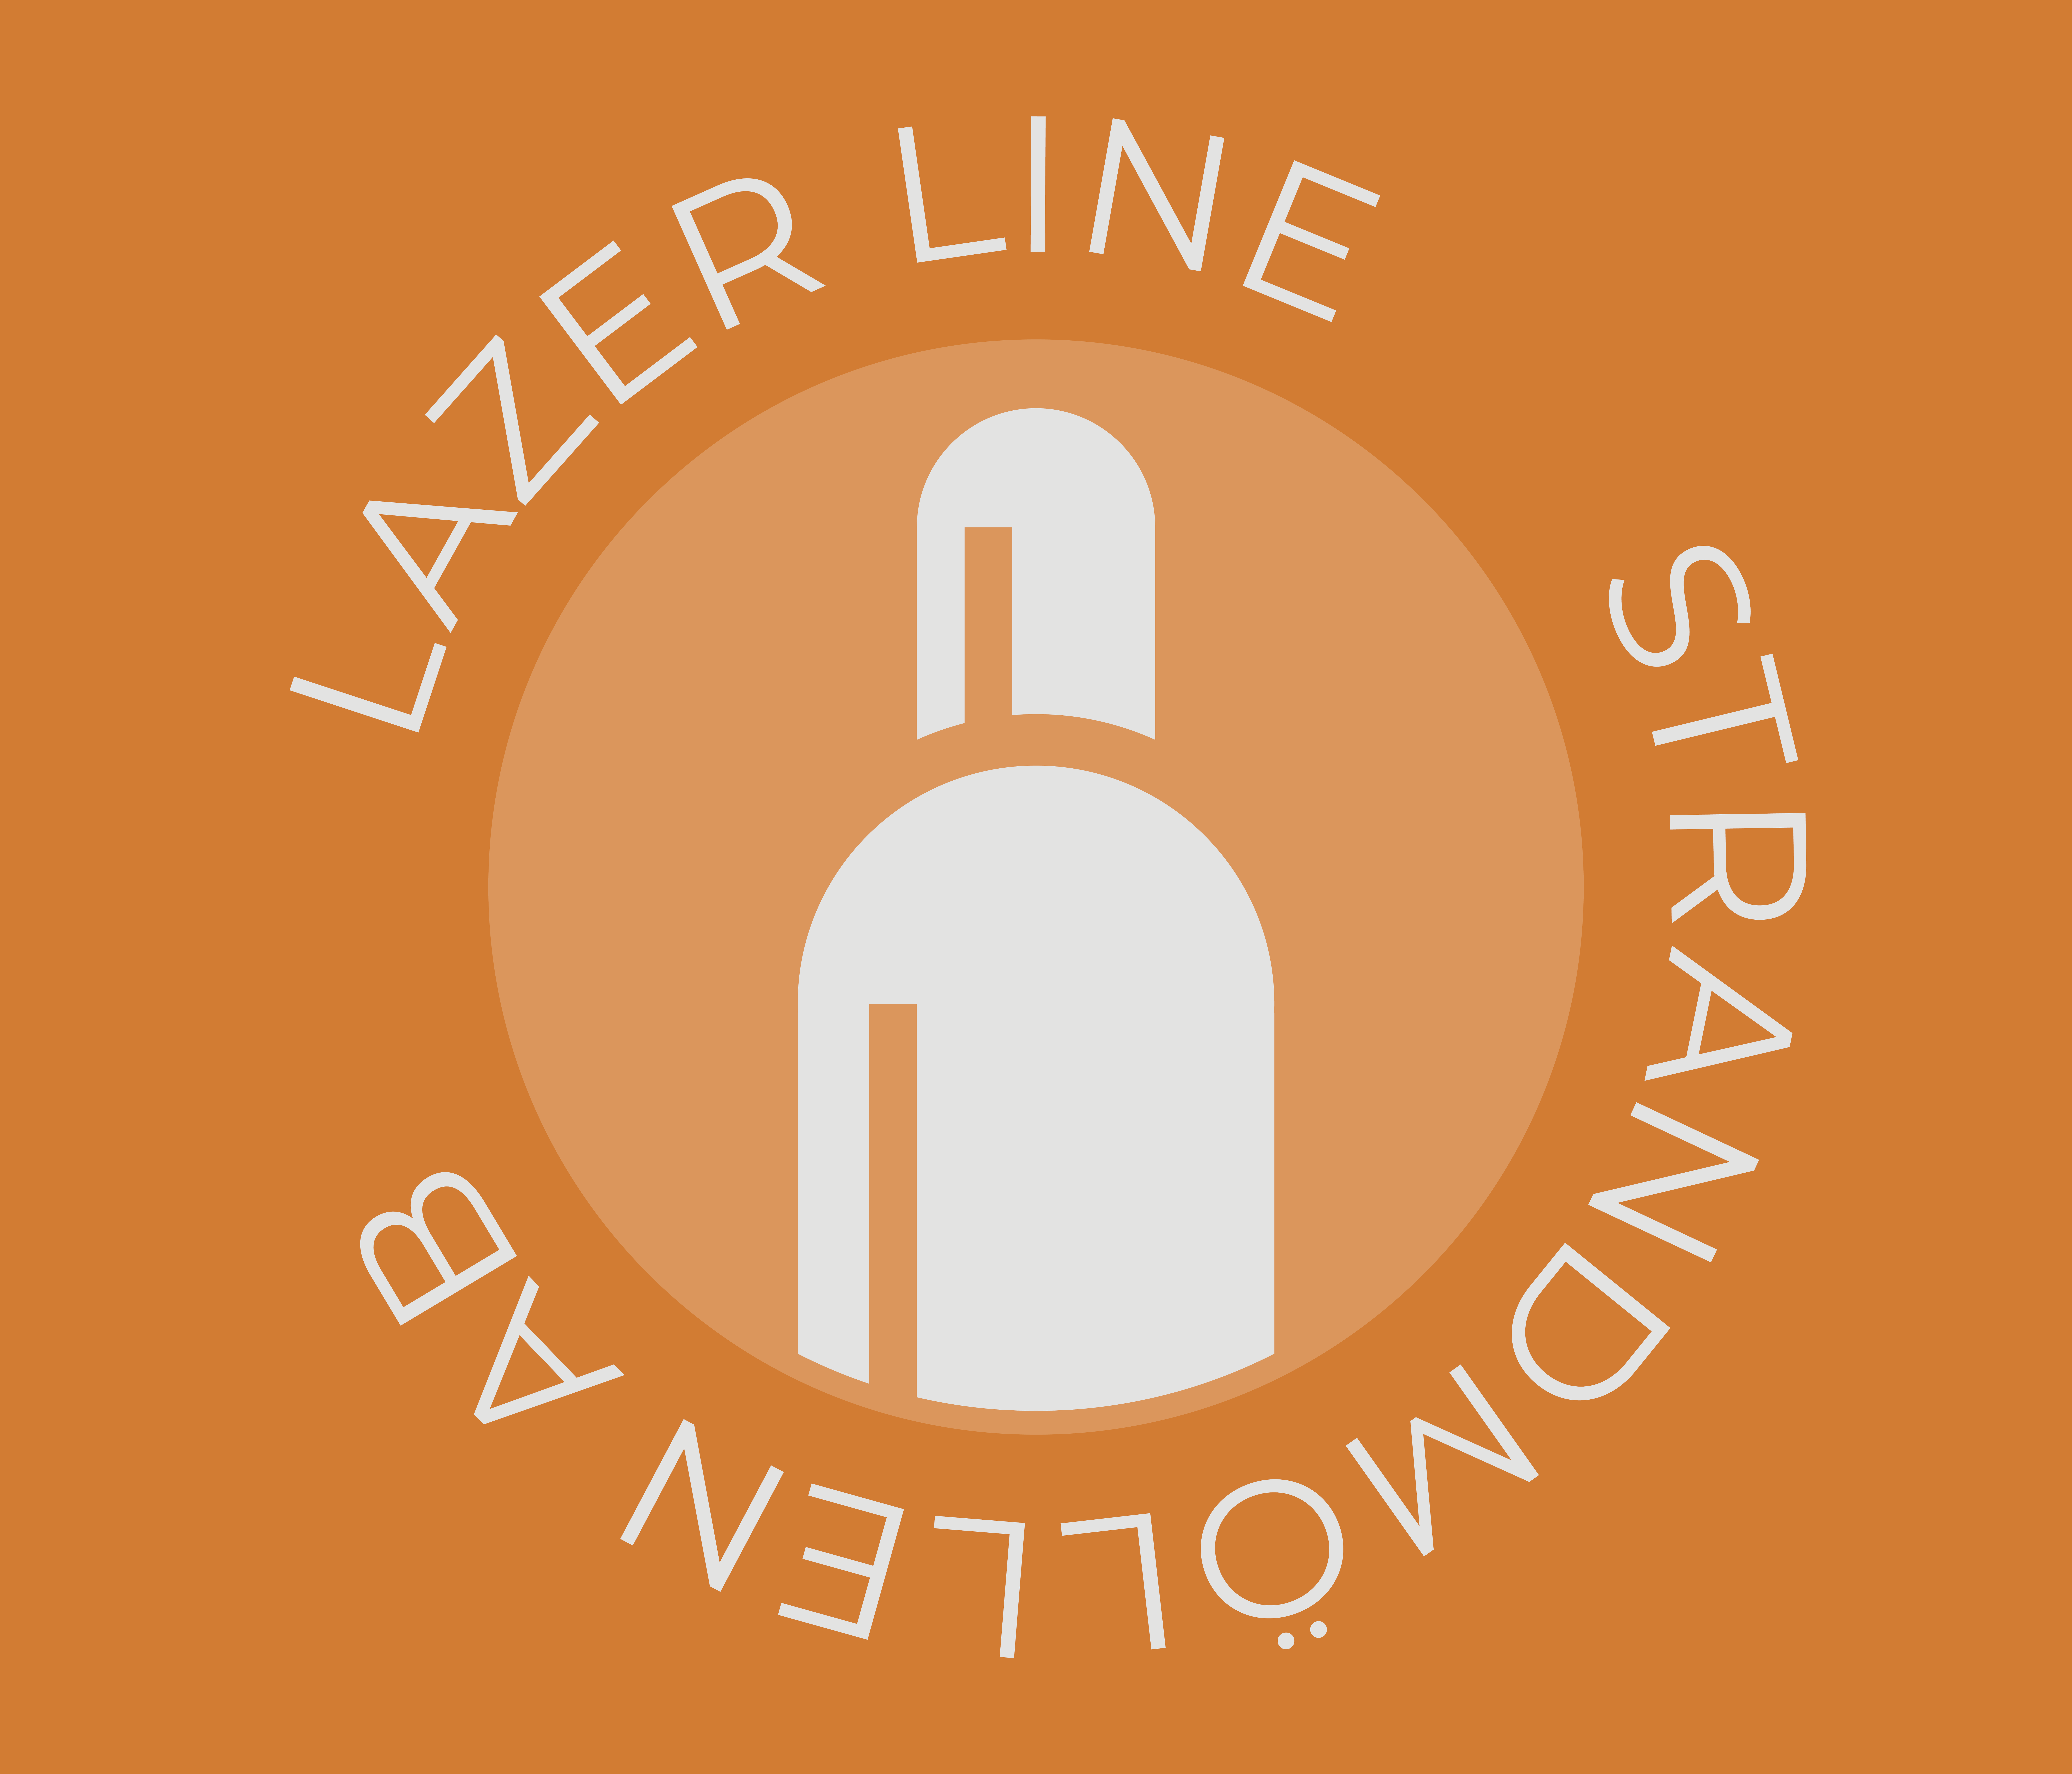 Lazer line